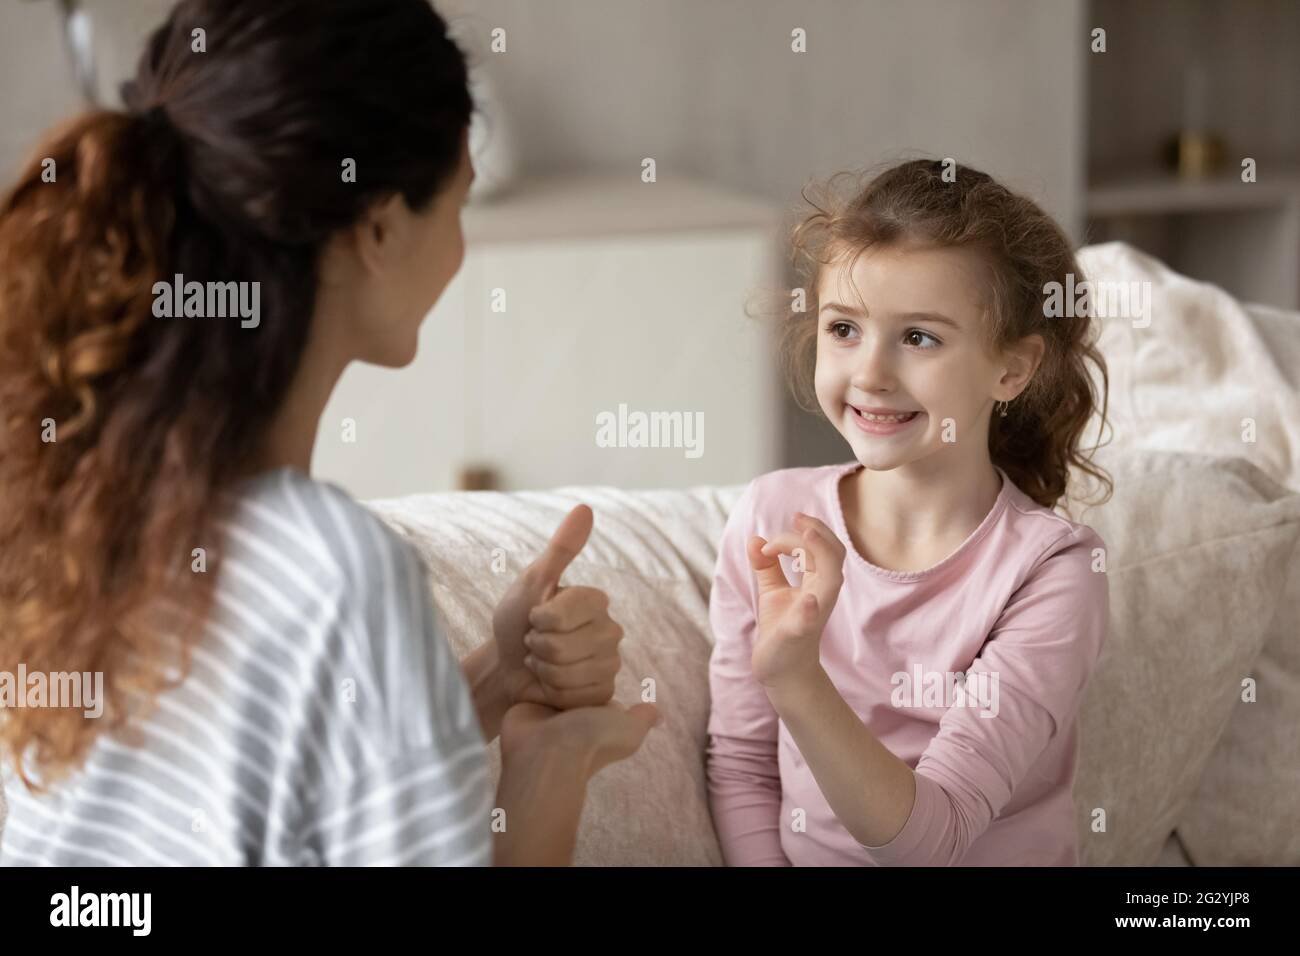 Little ethnic girl child talk using sign language Stock Photo